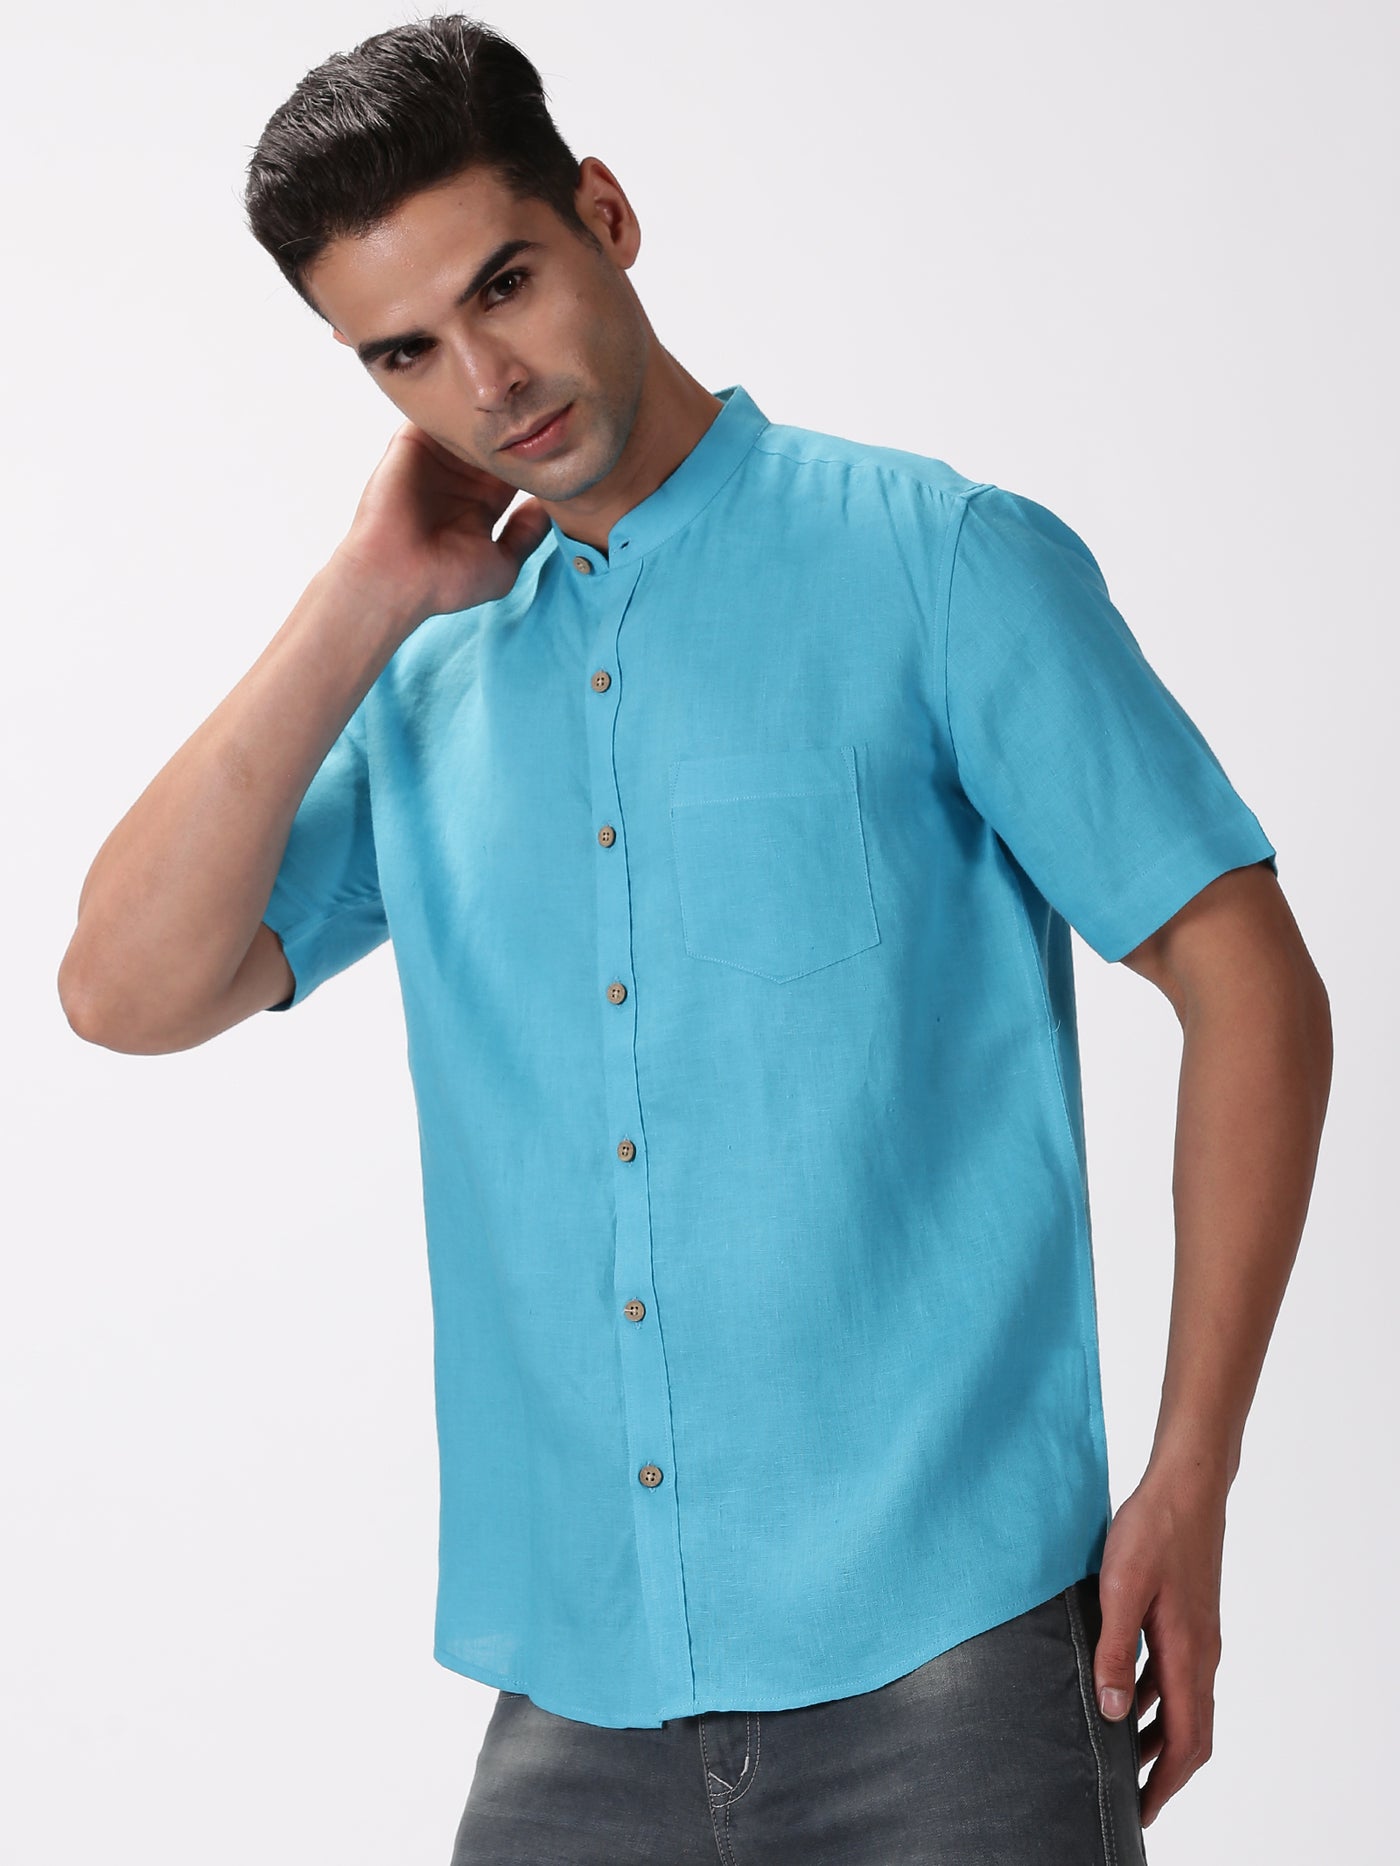 Enzo - Pure Linen Mandarin Collar Half Sleeve Shirt - Aqua Blue